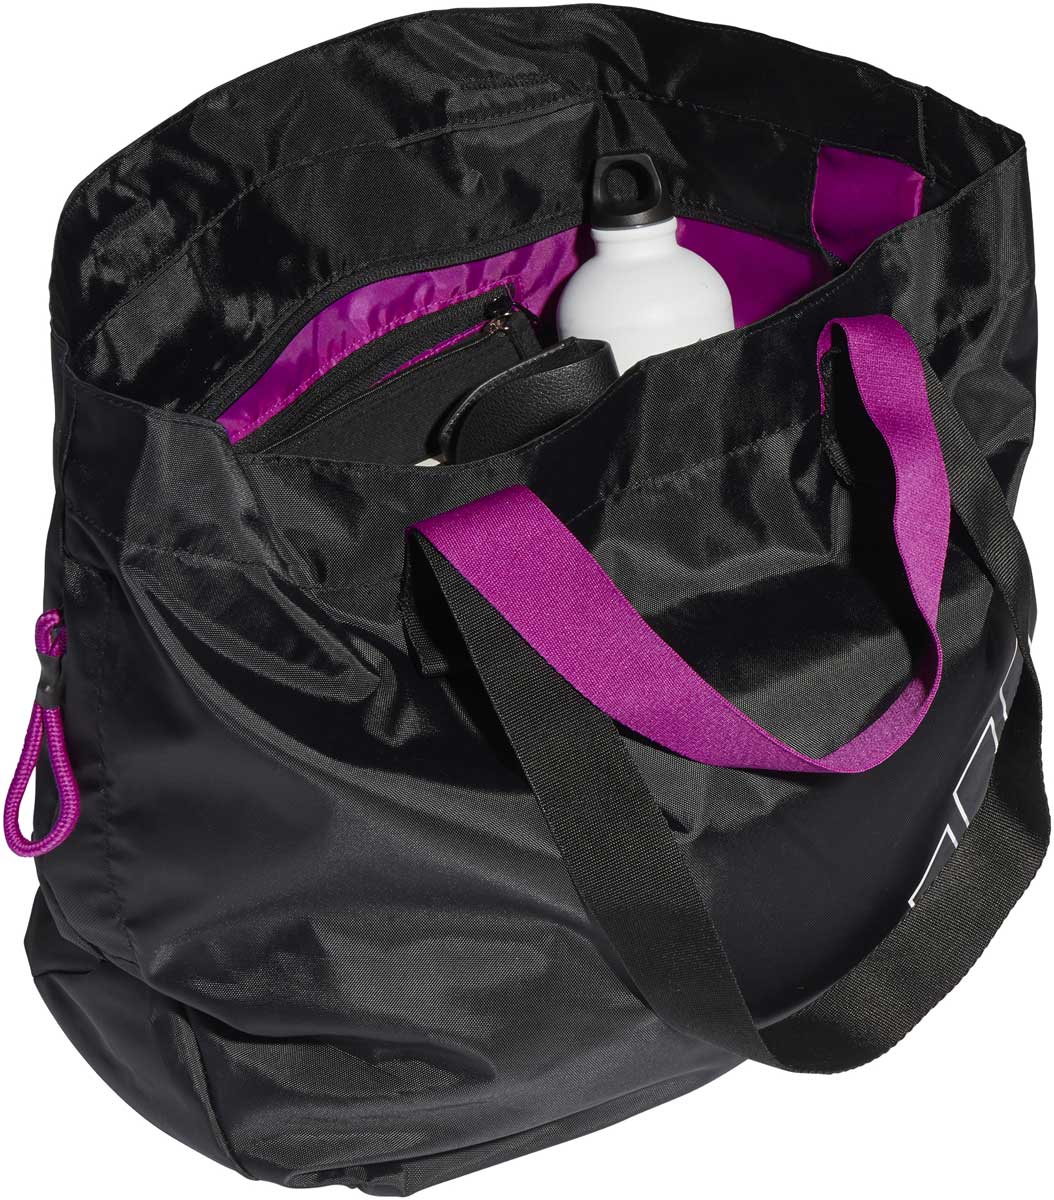 Women's sports bag